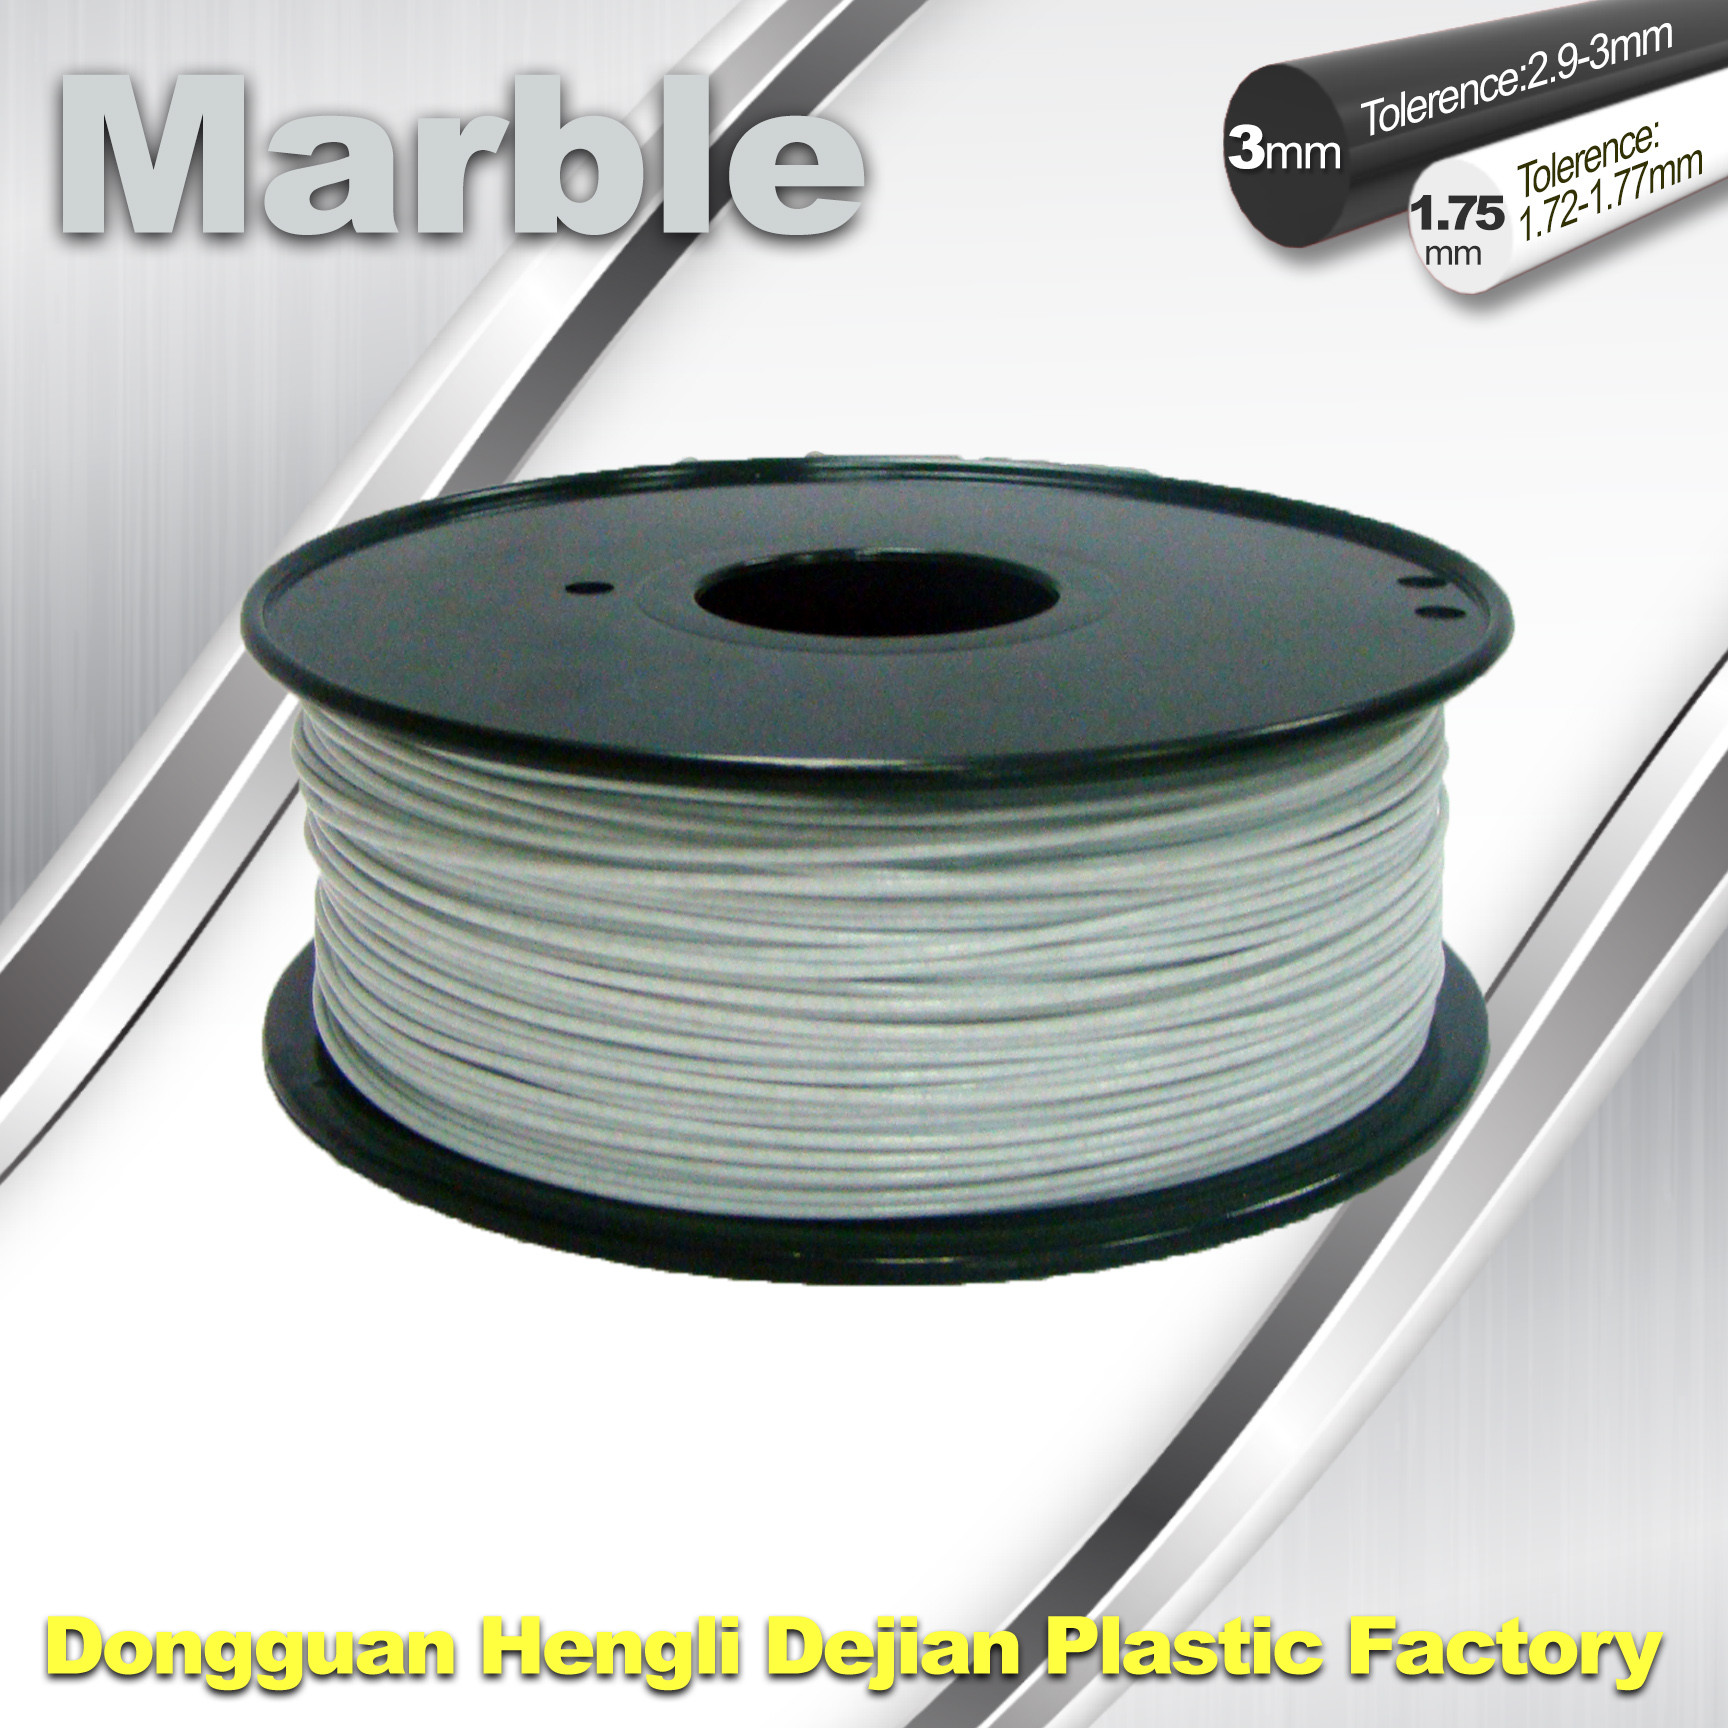 China Marble 3D High Strength Printer Filament 3mm / 1.75mm , Print temperature 200°C - 230°C wholesale